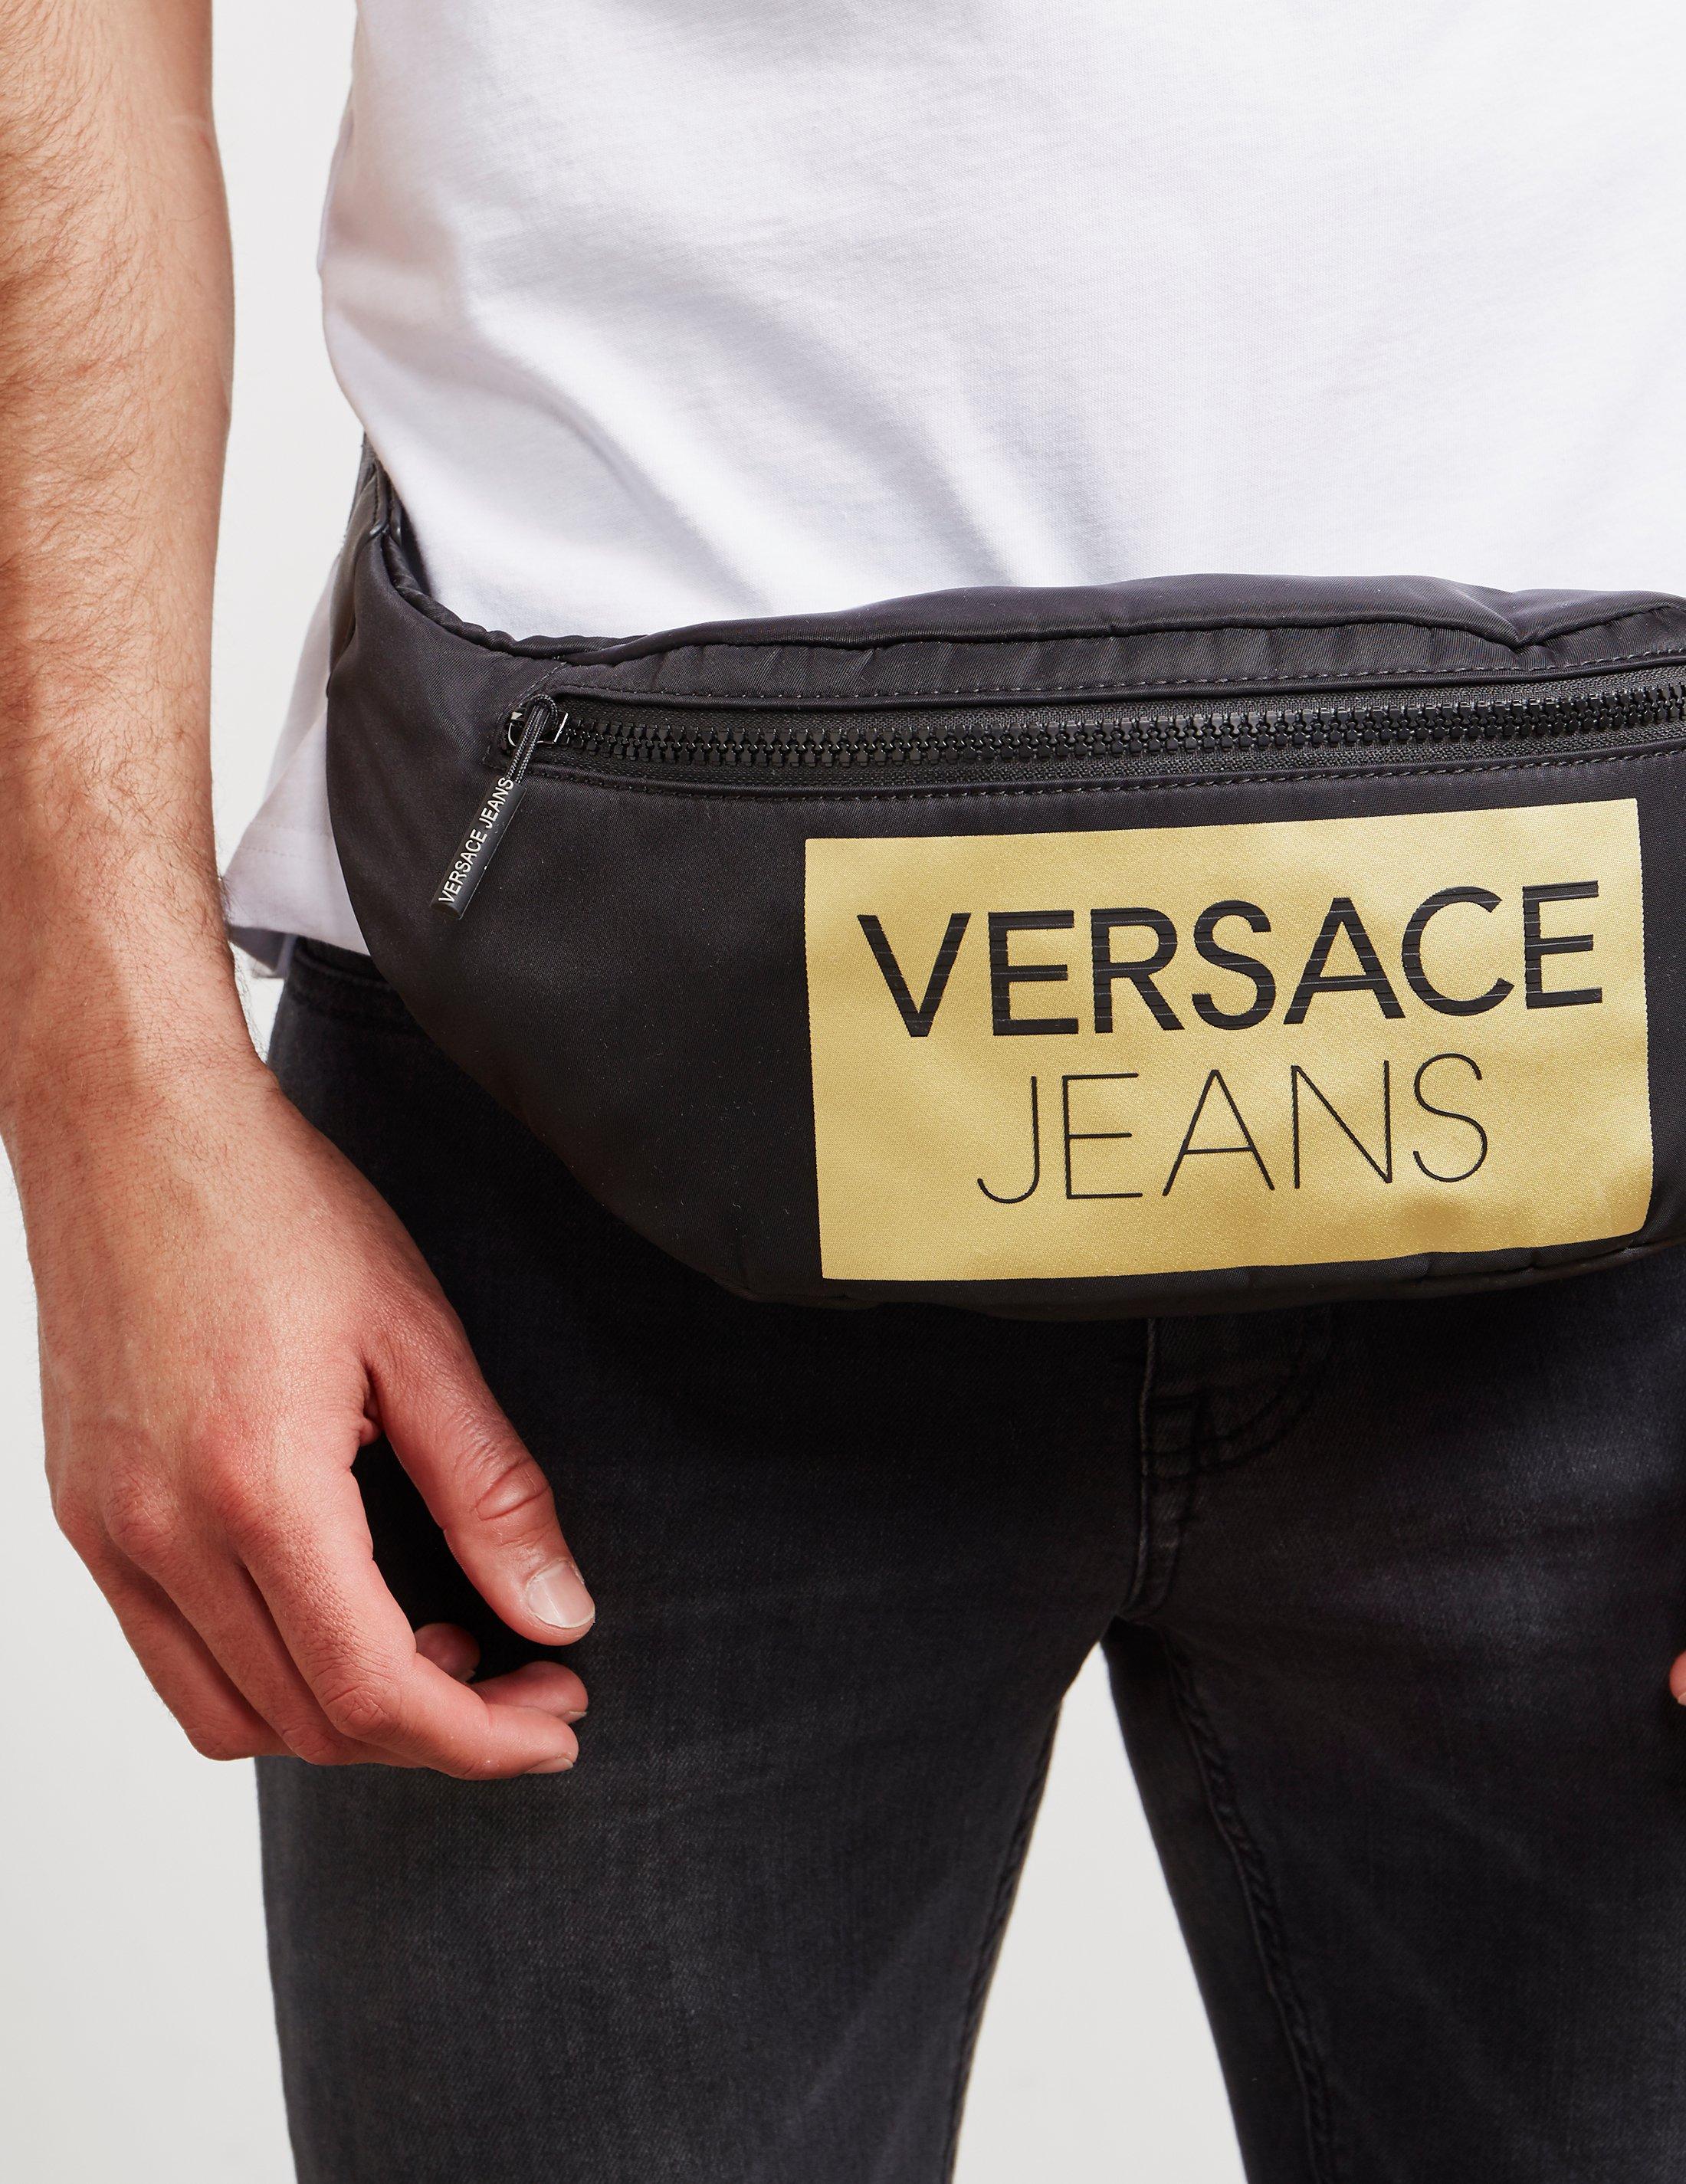 versace jeans bum bag